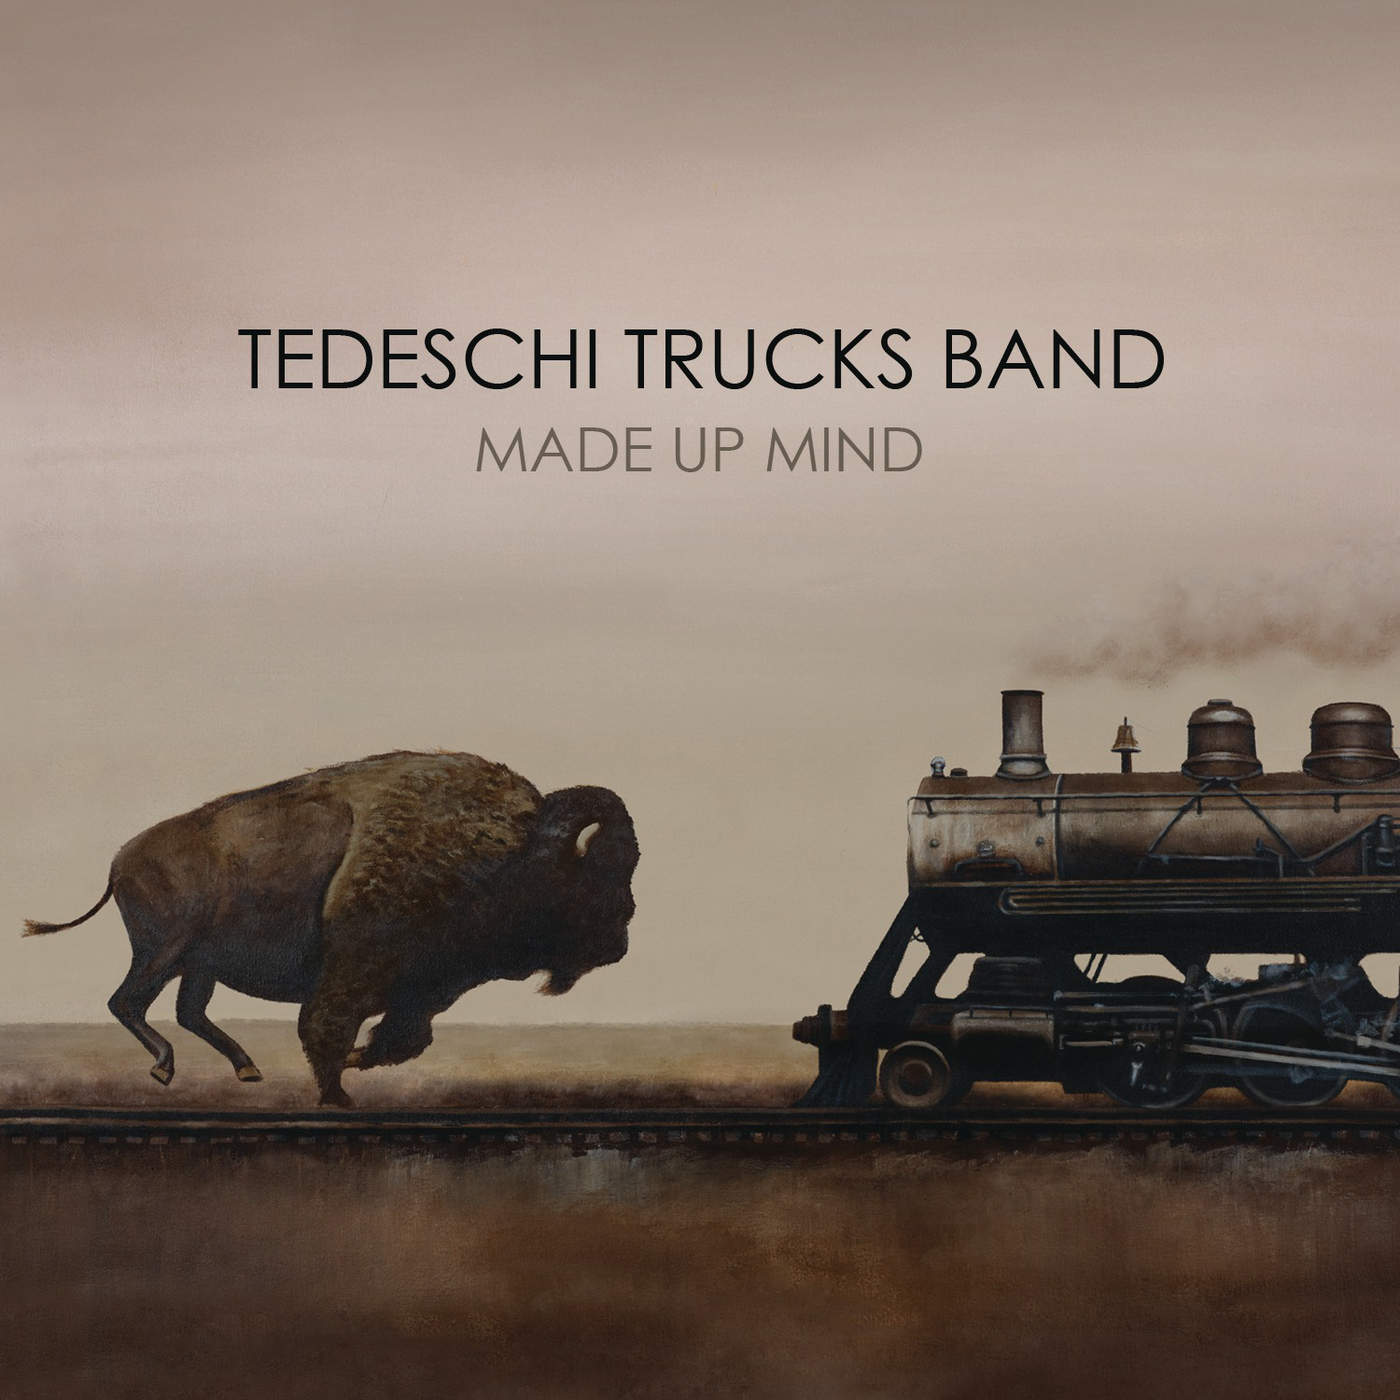 Art for Made Up Mind by Tedeschi Trucks Band